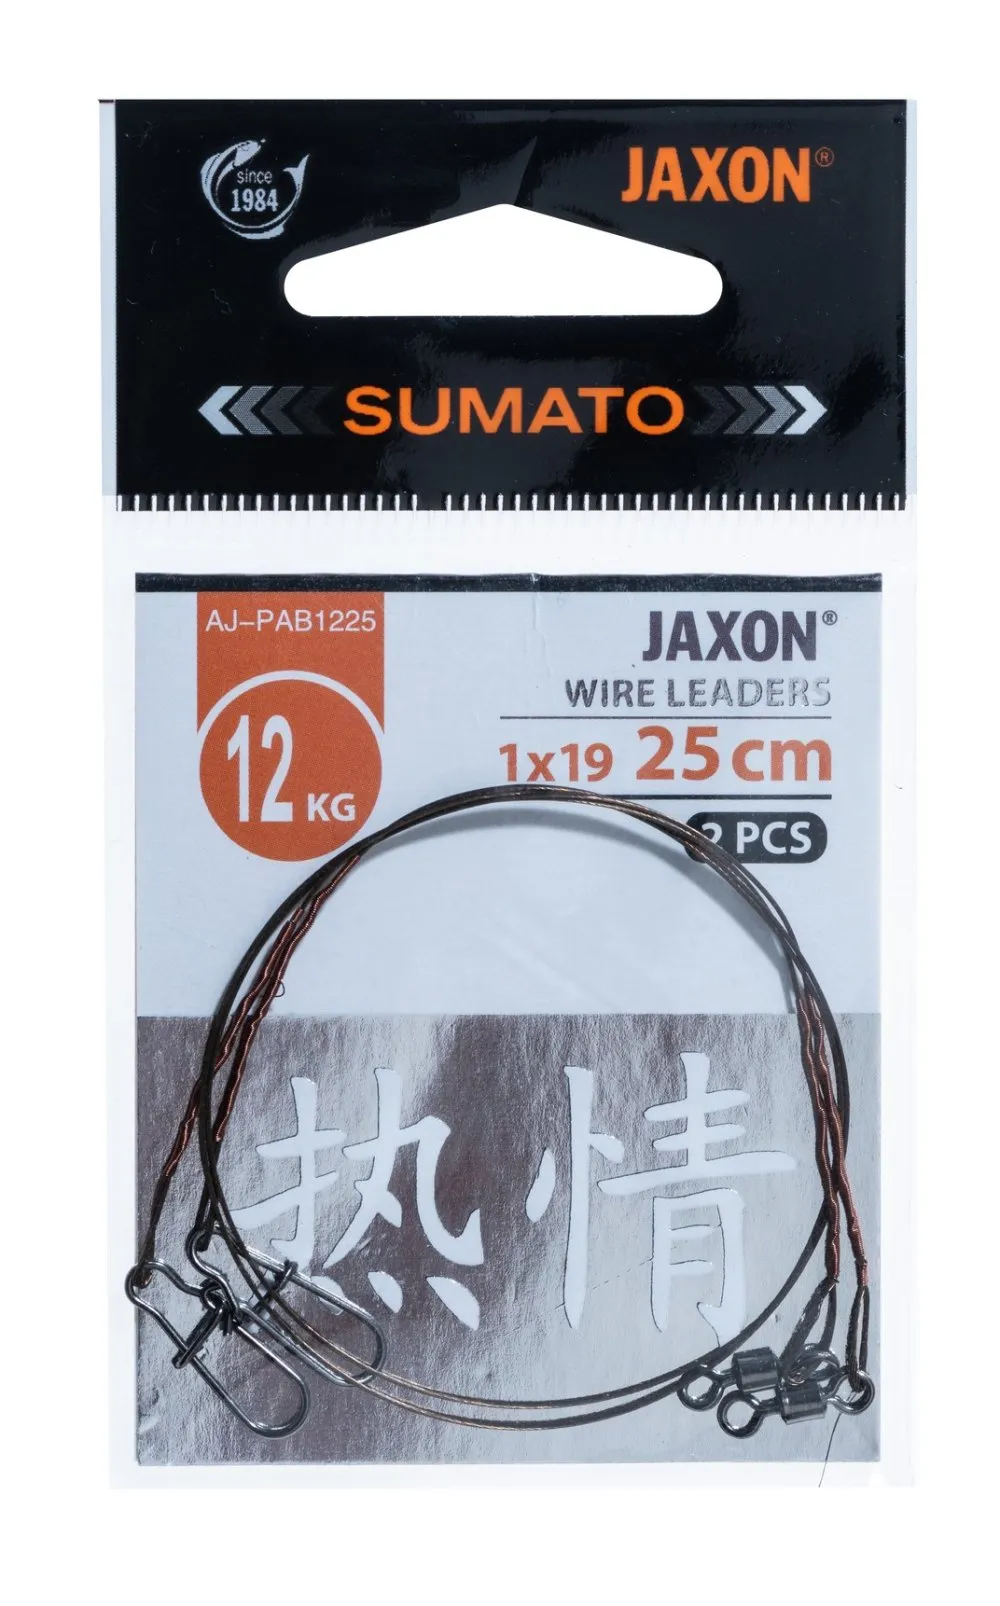 SNECI - Horgász webshop és horgászbolt - JAXON SUMATO WIRE LEADERS 12kg 25cm